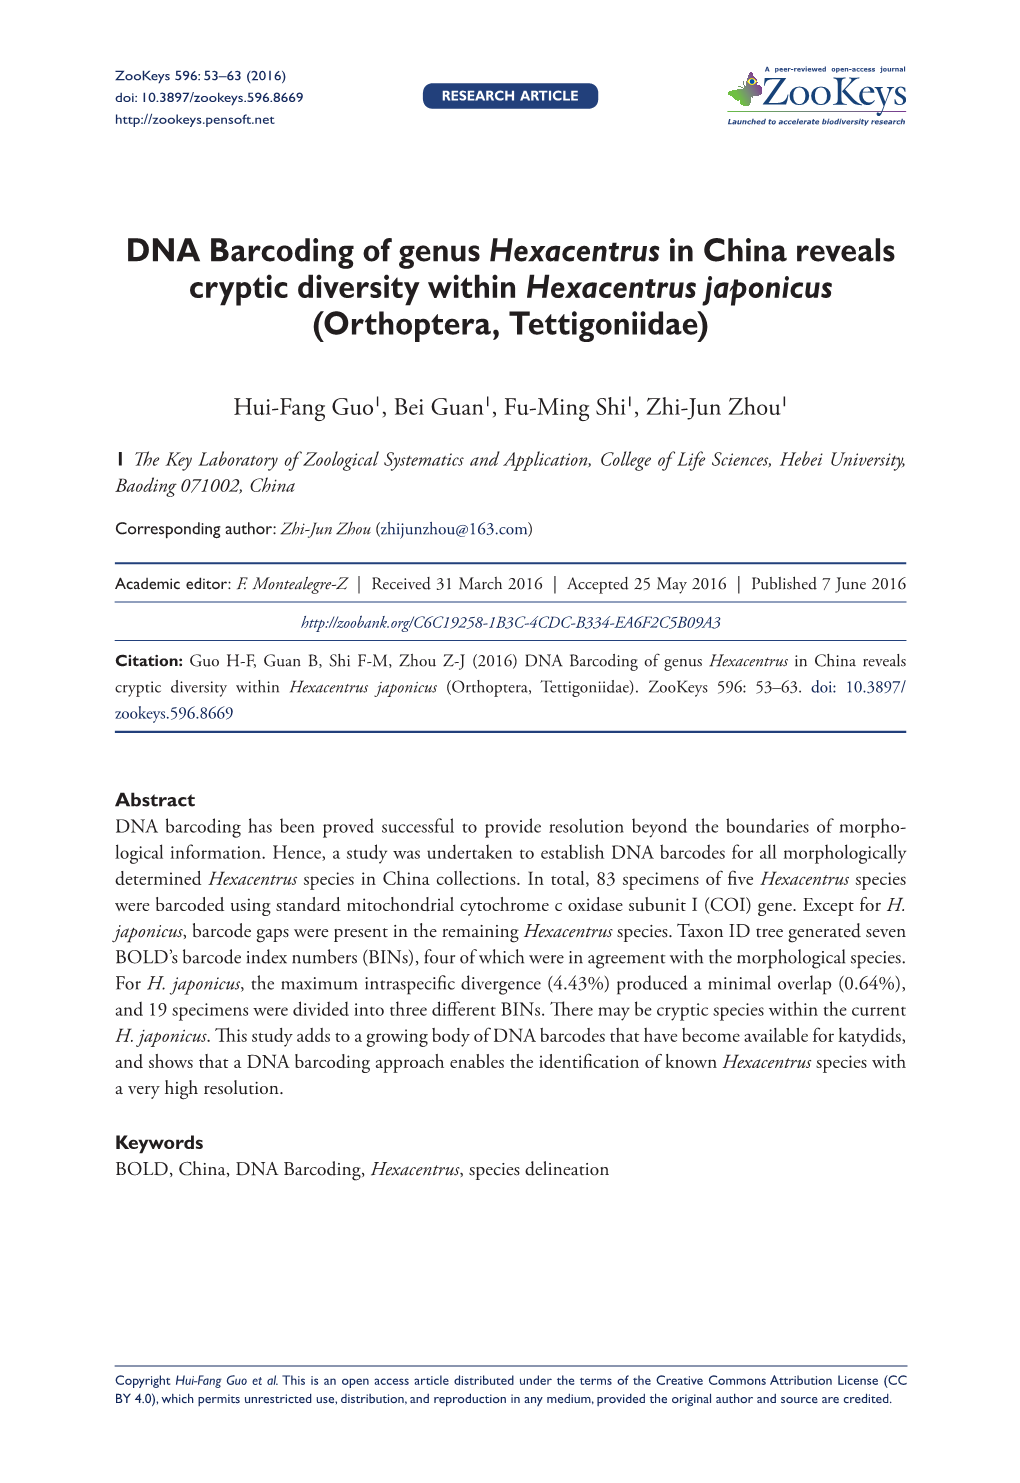 ﻿DNA Barcoding of Genus Hexacentrus in China Reveals Cryptic Diversity Within Hexacentrus Japonicus (Orthoptera, Tettigoniidae